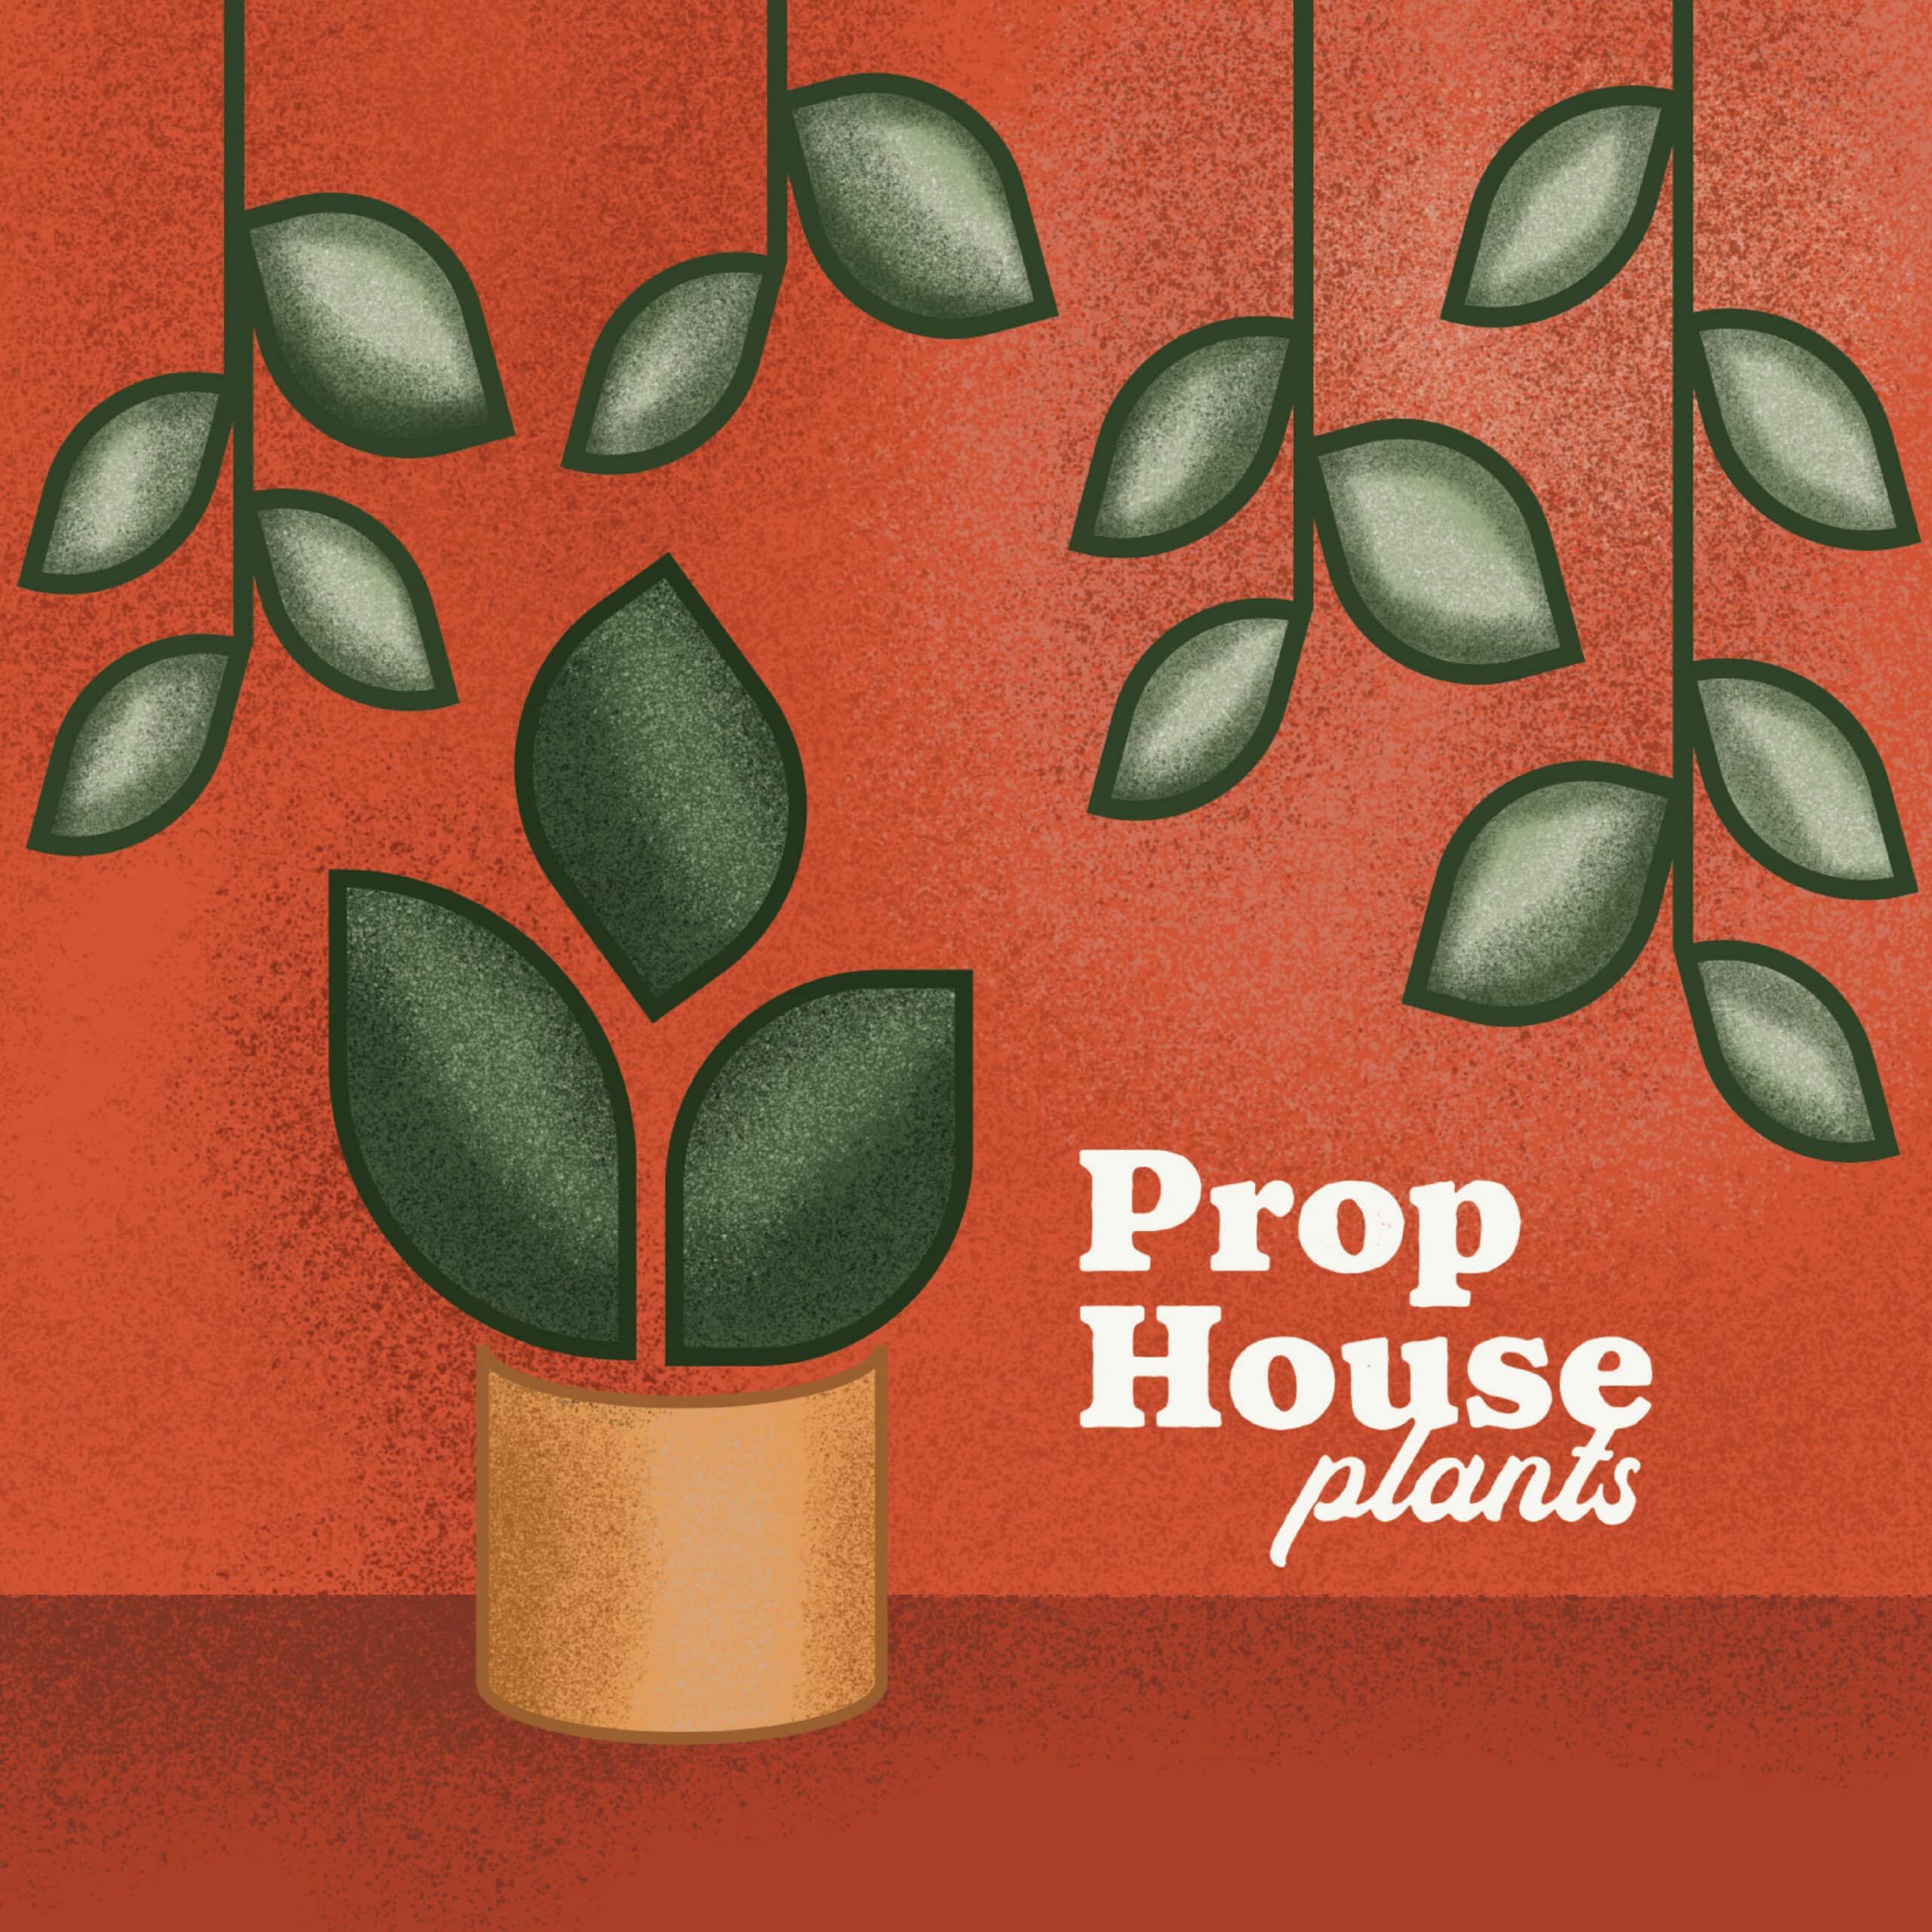 Custom Illustration for Prop House Plants in San Pedro California By Stellen Design Brand Design Agency in Los Angeles Ran by Brand Designer Jordis Small